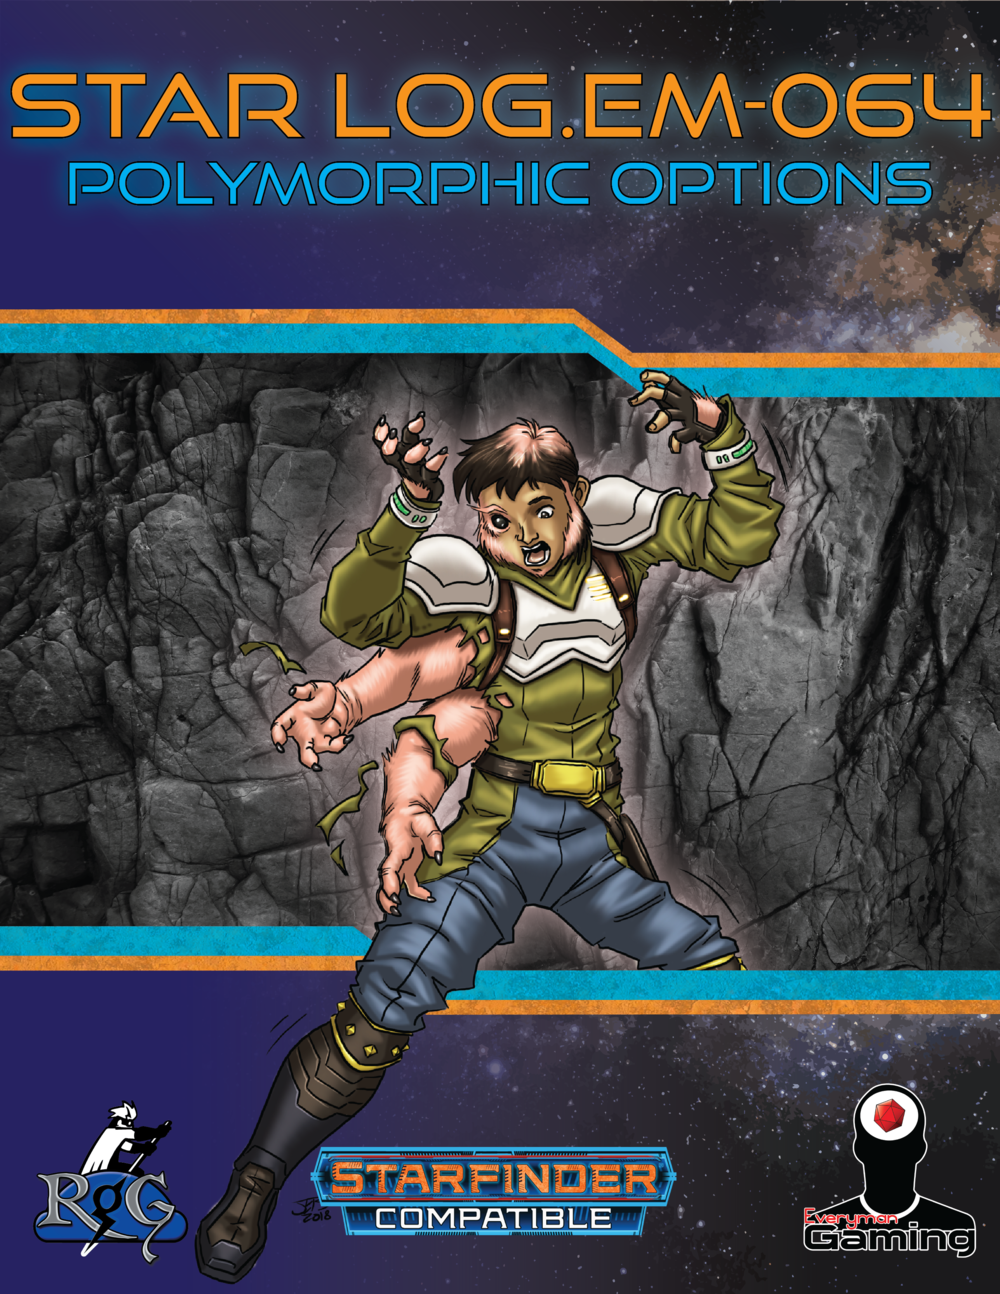 Star Log.EM-064: Polymorphic Options